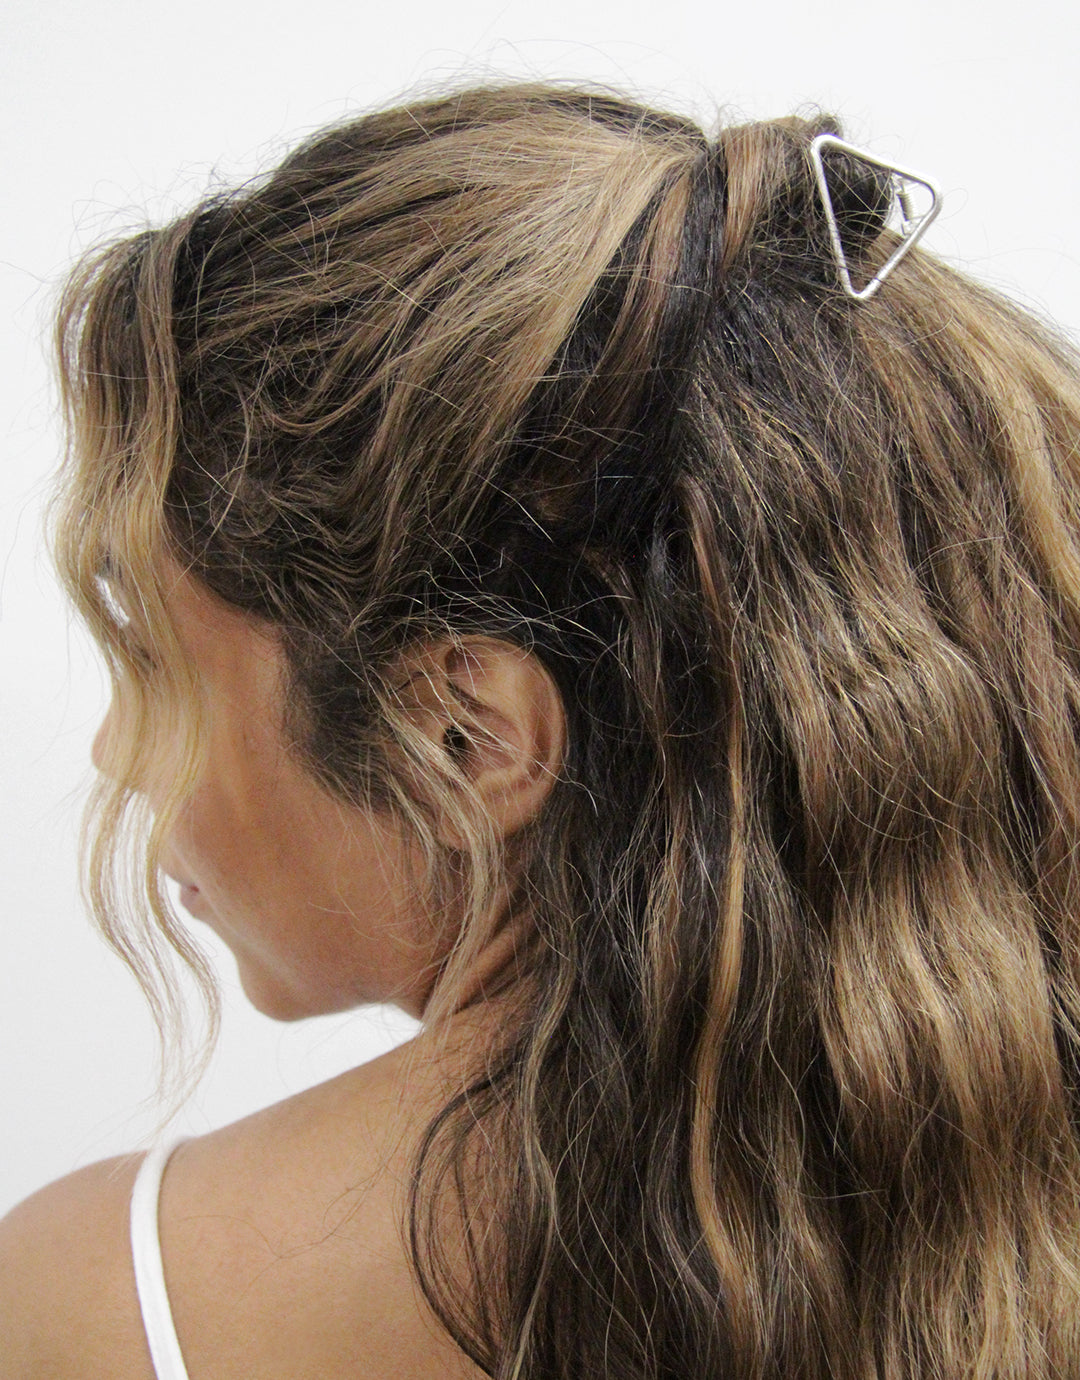 BANDED Women’s Premium Hair Accessories - Sail Away (SM) - Matte Metal Claw Hair Clips